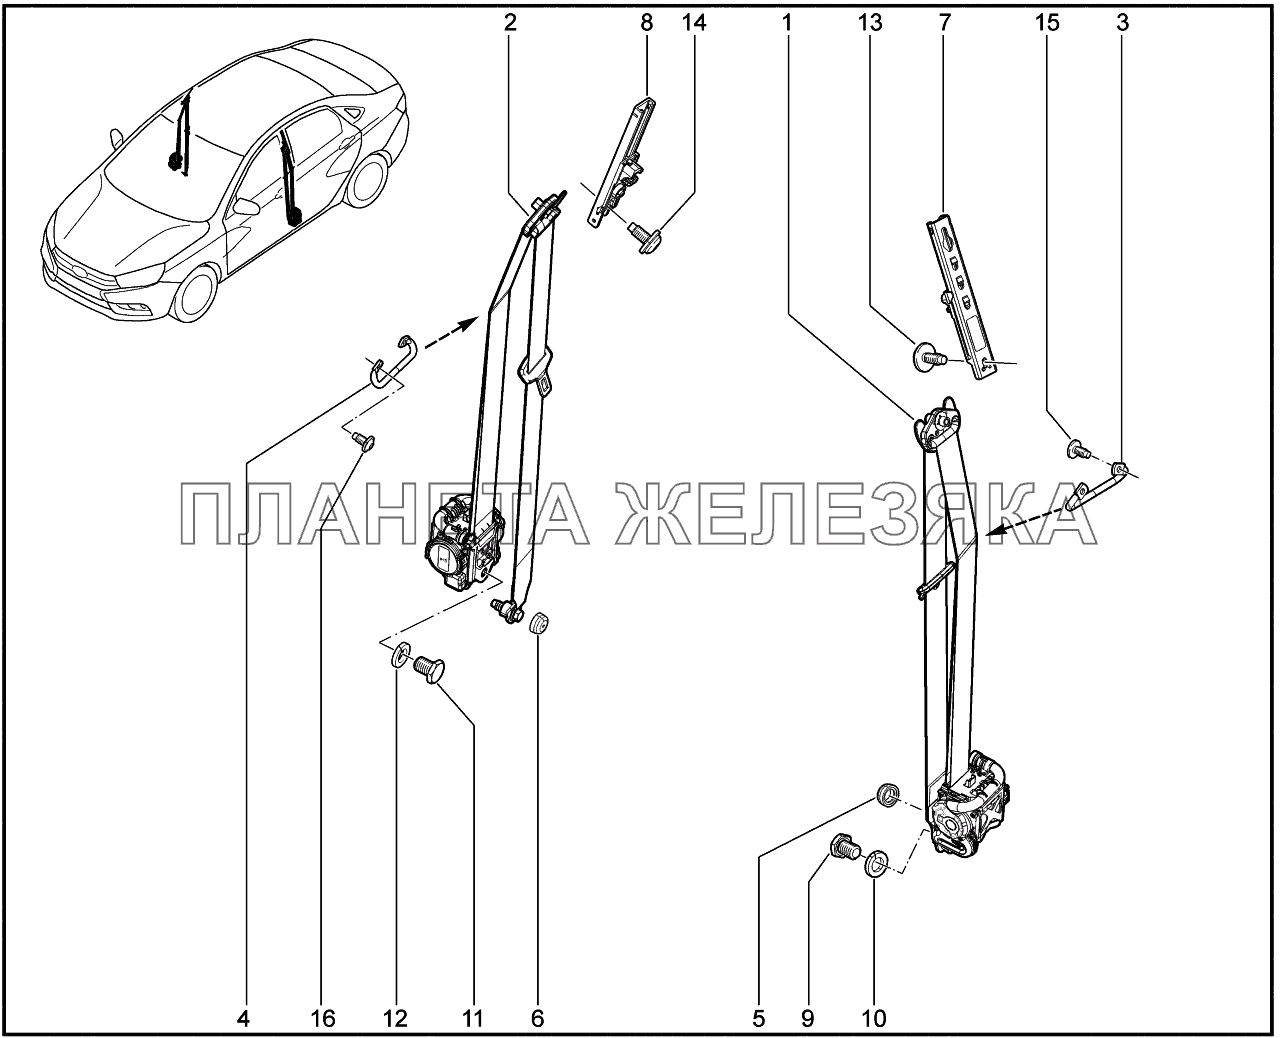 592010. Ремни безопасности передние Lada Vesta